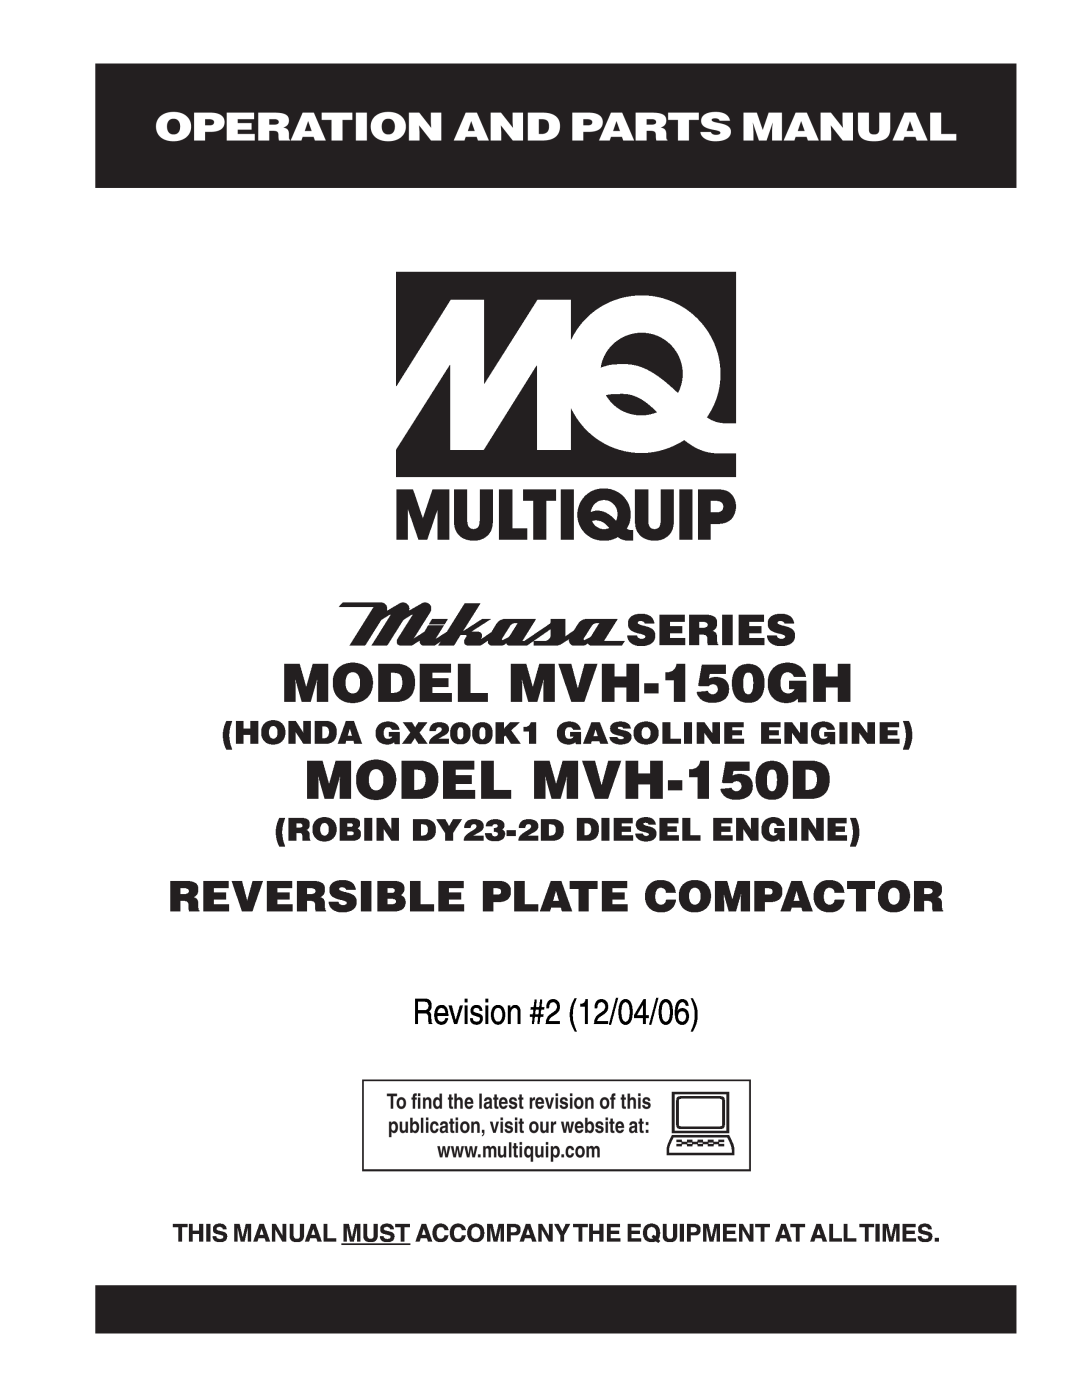 Multiquip manual Operation And Parts Manual, HONDA GX200K1 GASOLINE ENGINE, MODEL MVH-150GH, MODEL MVH-150D, Series 